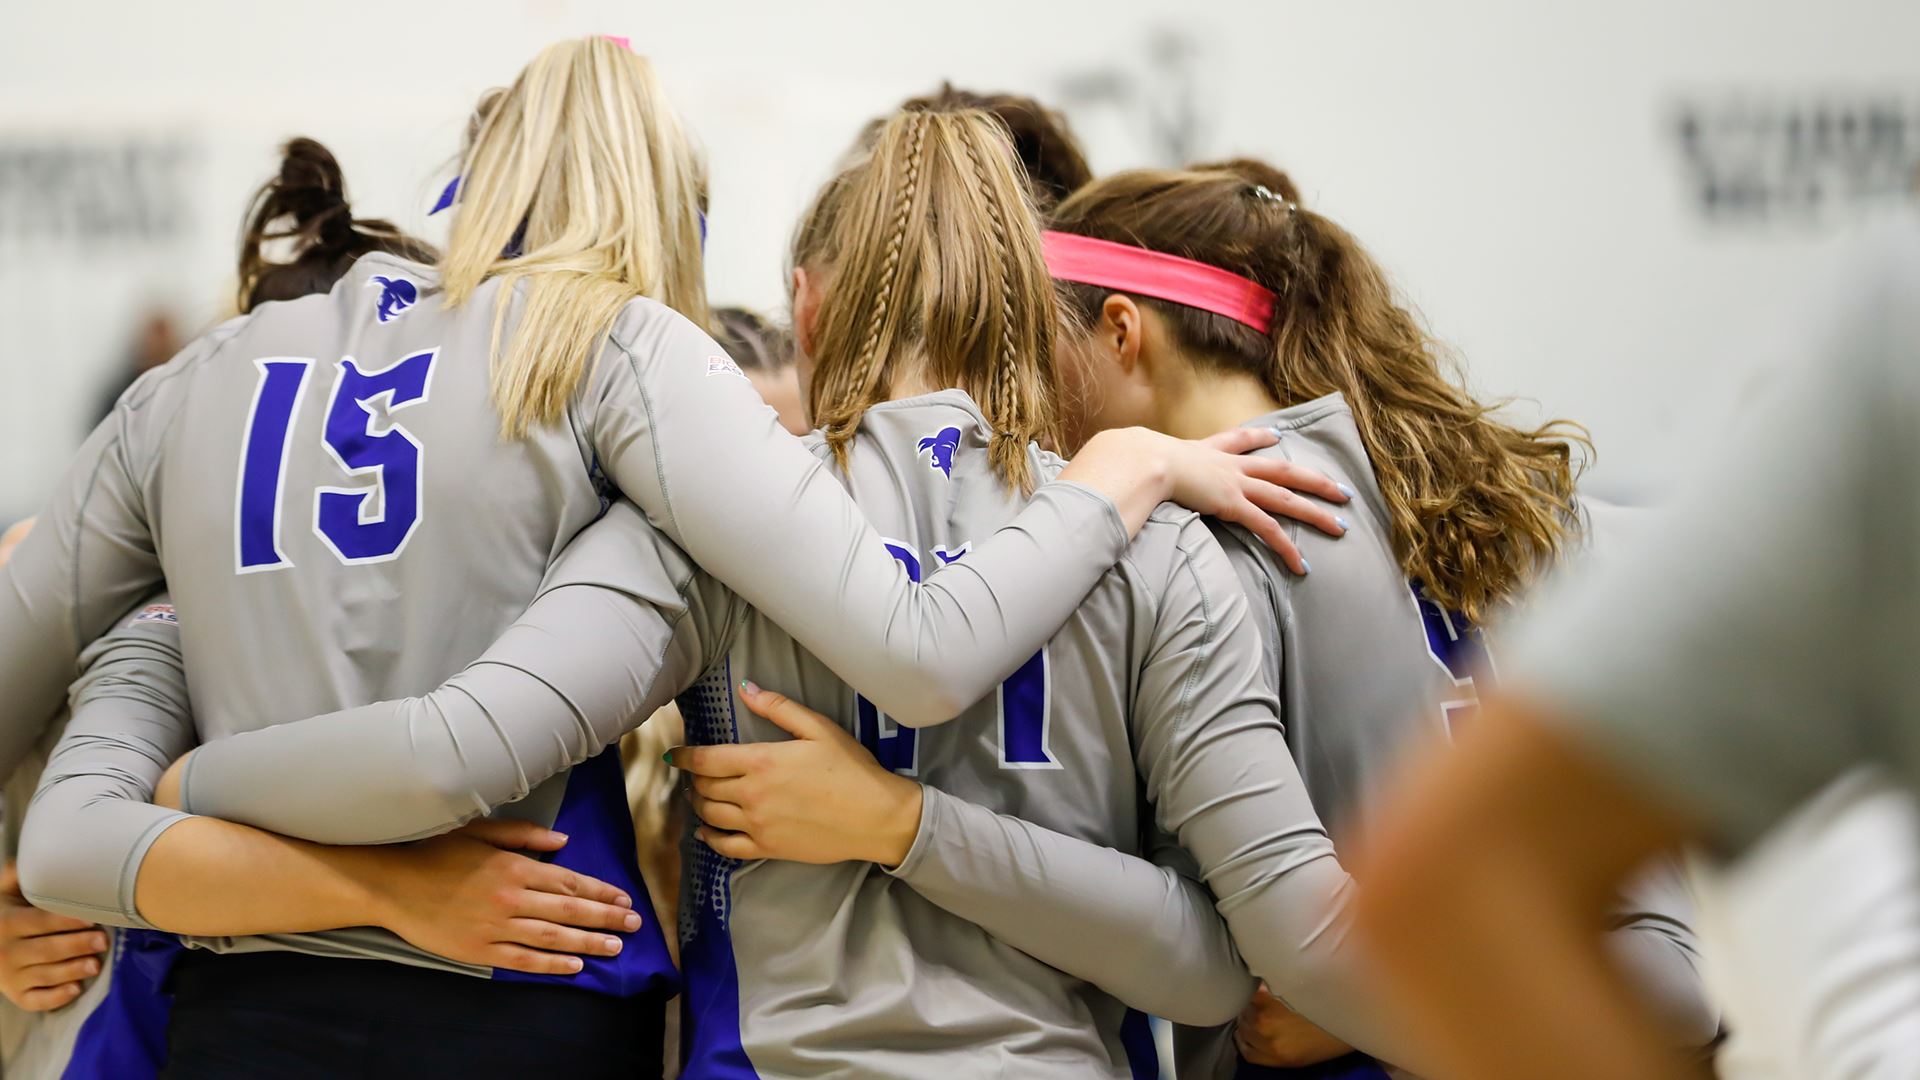 The Seton Hall women's volleyball team huddles before a match.